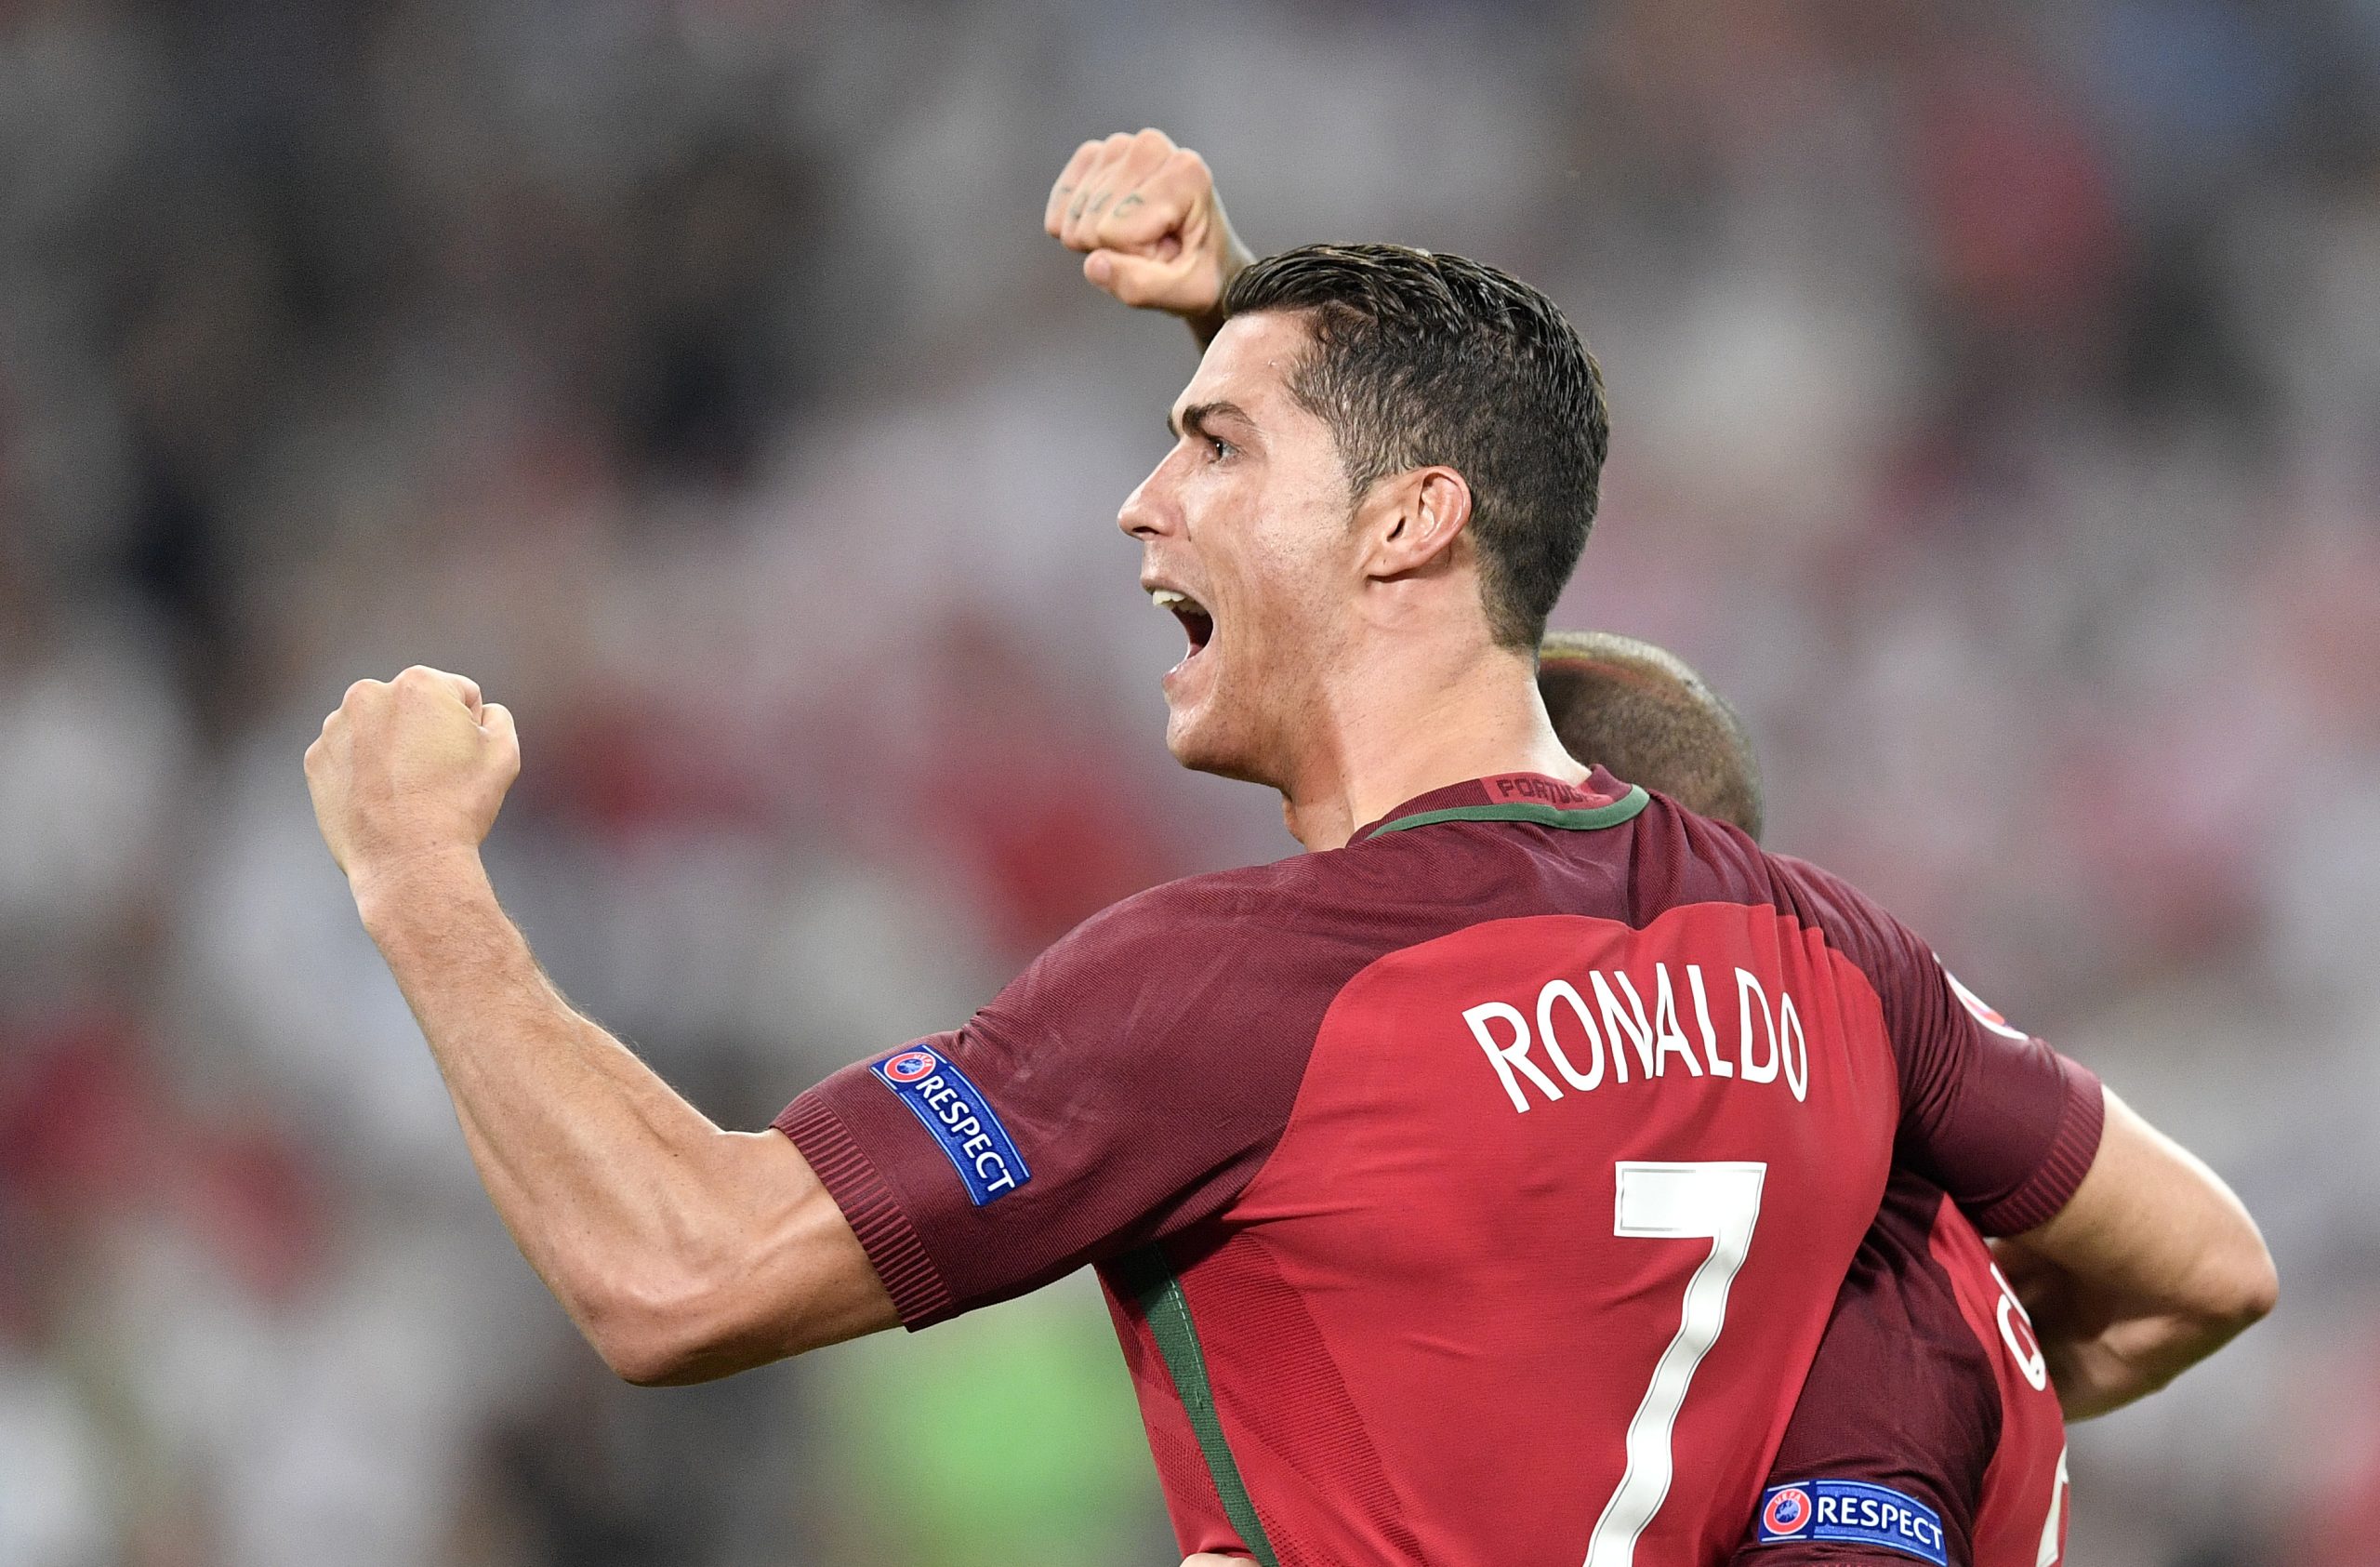 Ronaldo imita Scolari e já se tornou viral na internet [Vídeo]